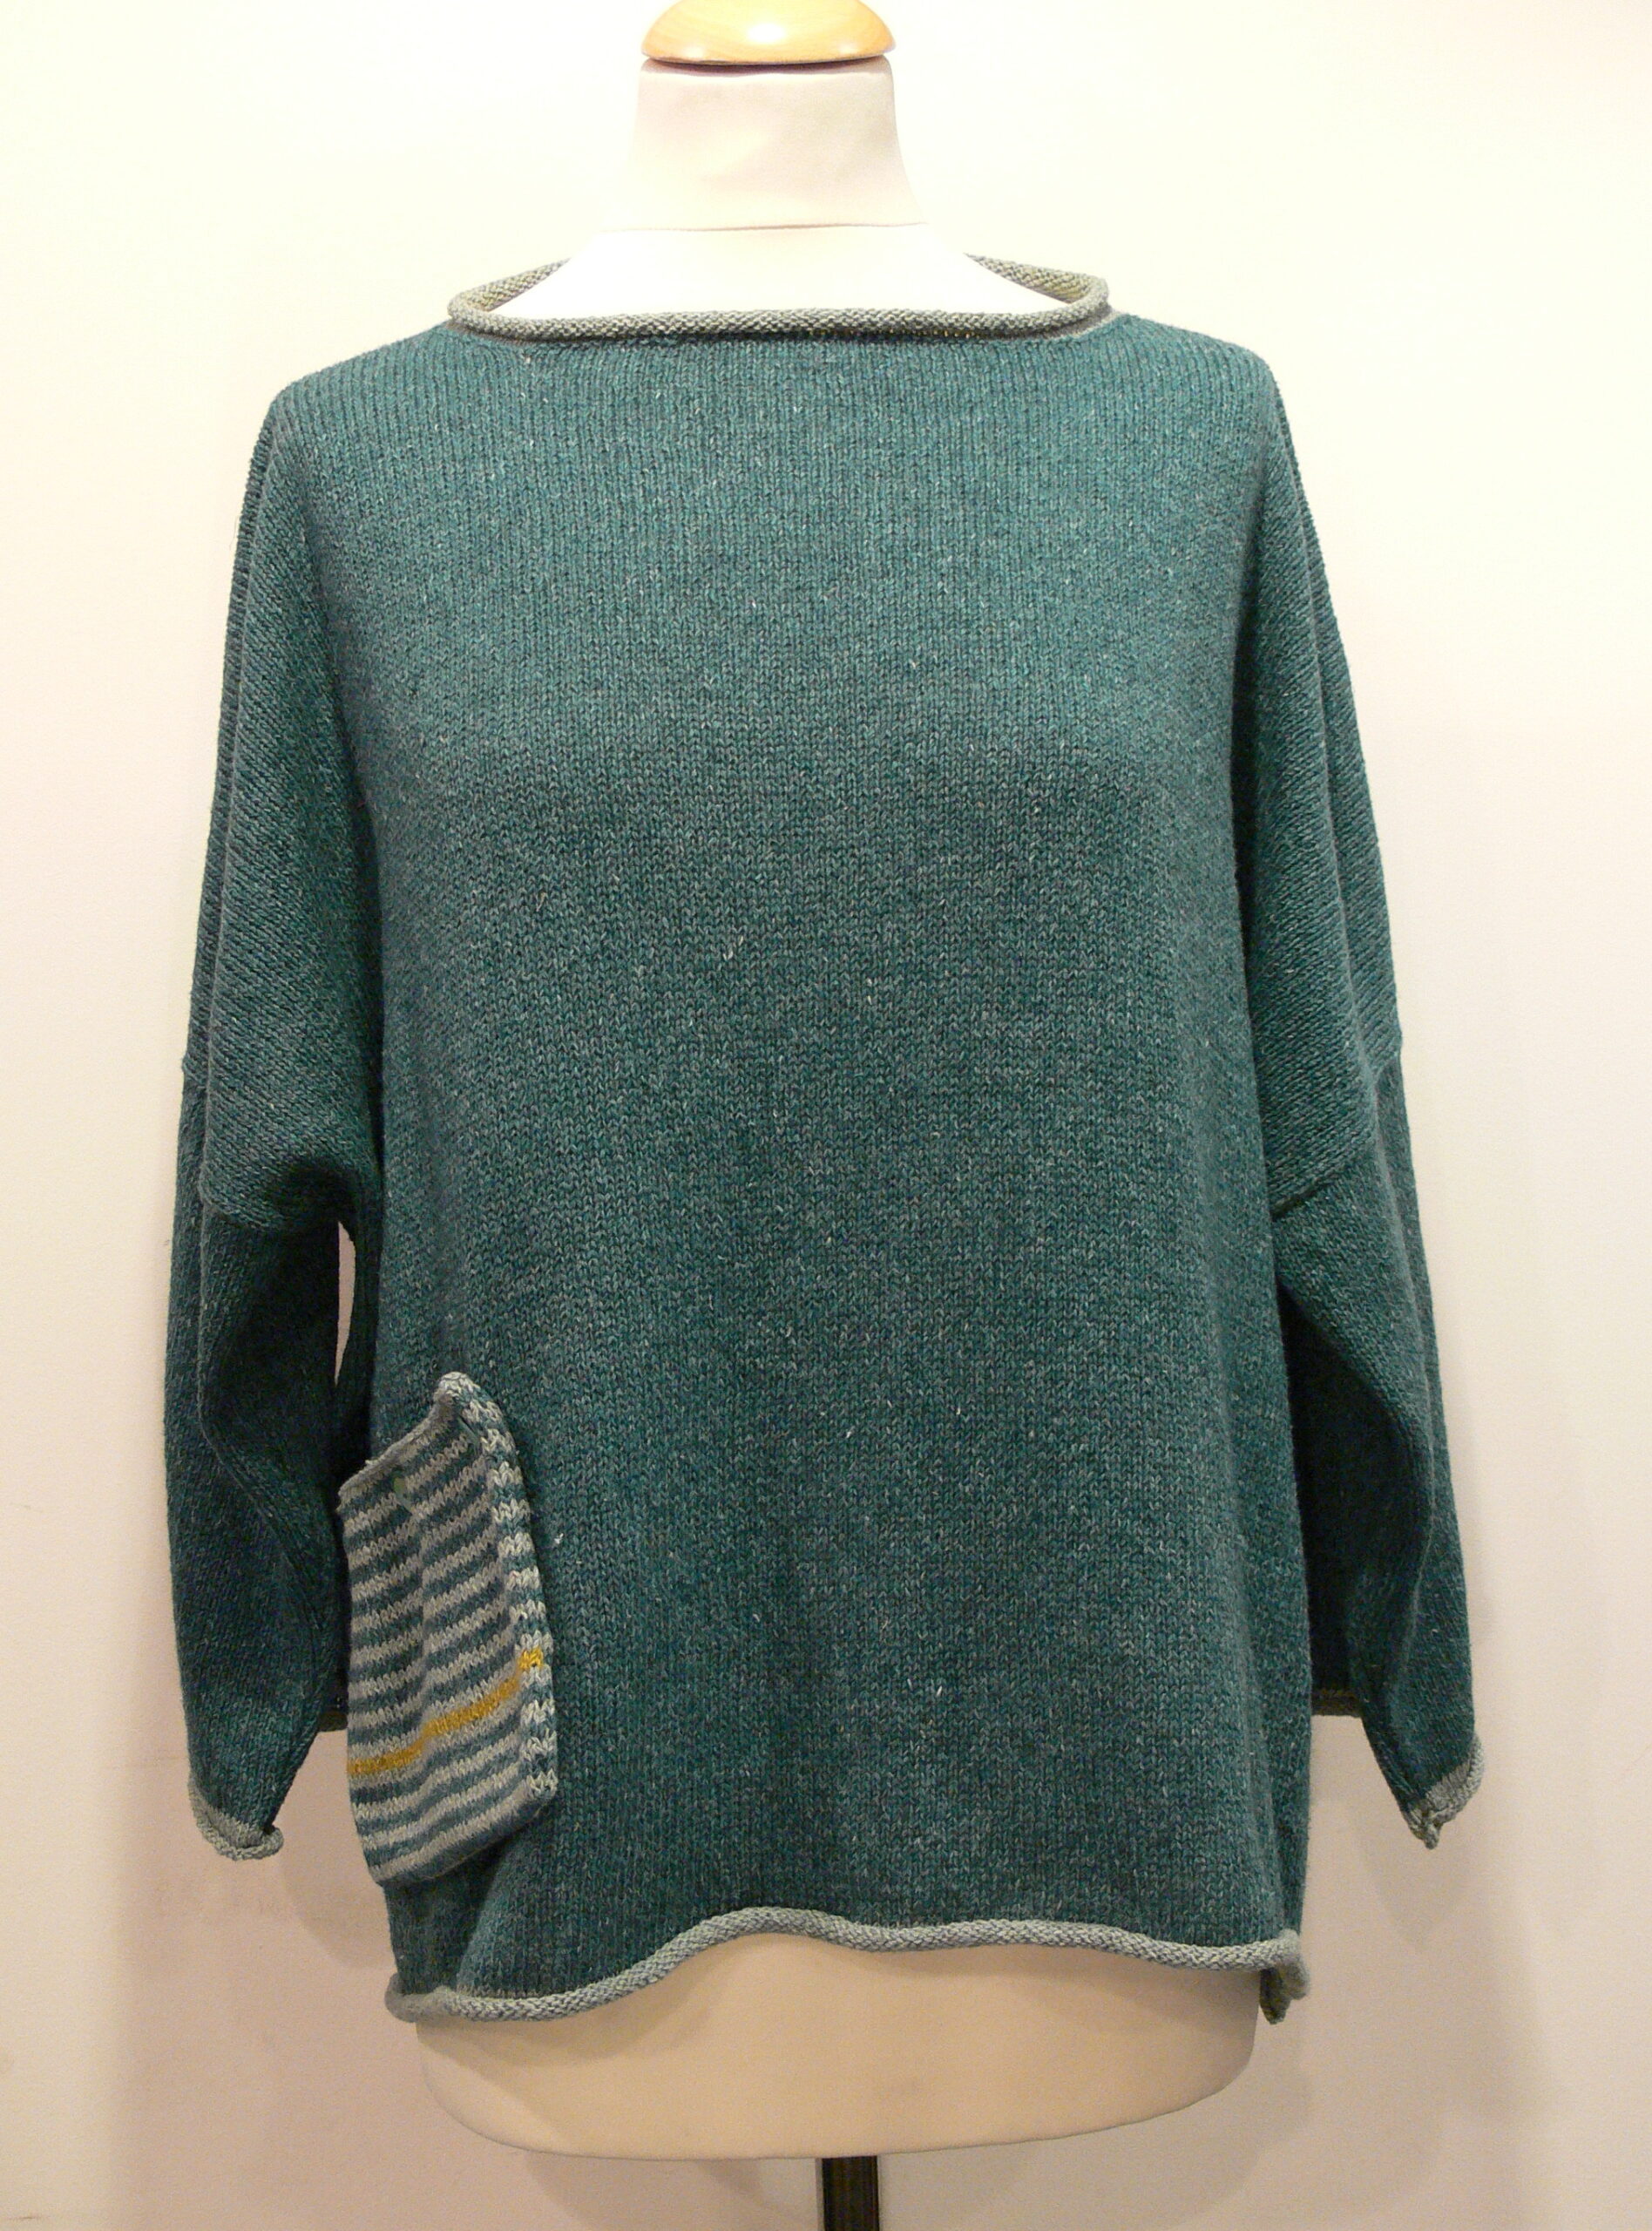 Calypso Medium Tunic in duckegg/mint/sap knitted in silk/lambswool yarn